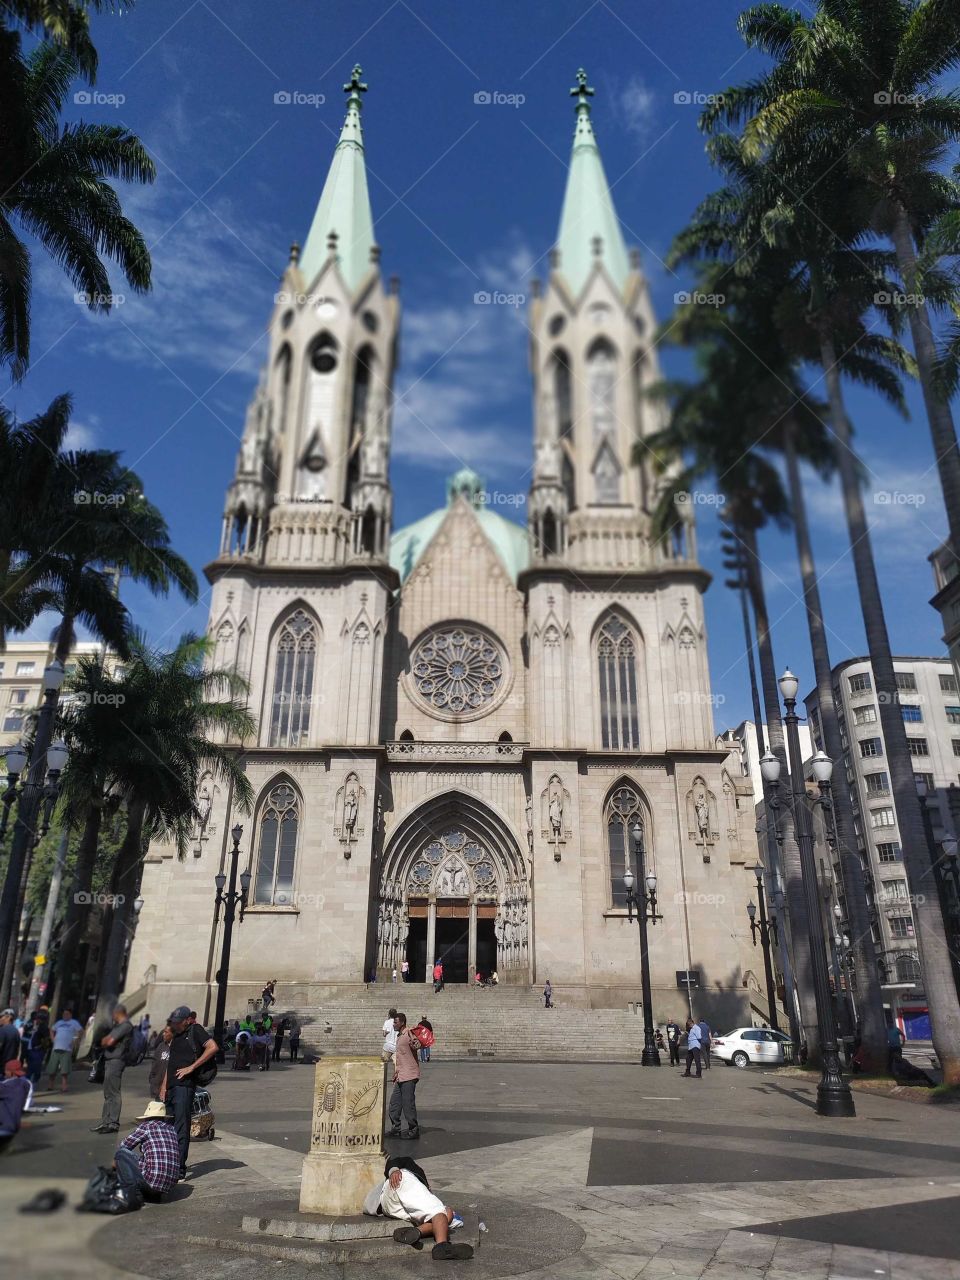 Sé Cathedral in São Paulo Brazil